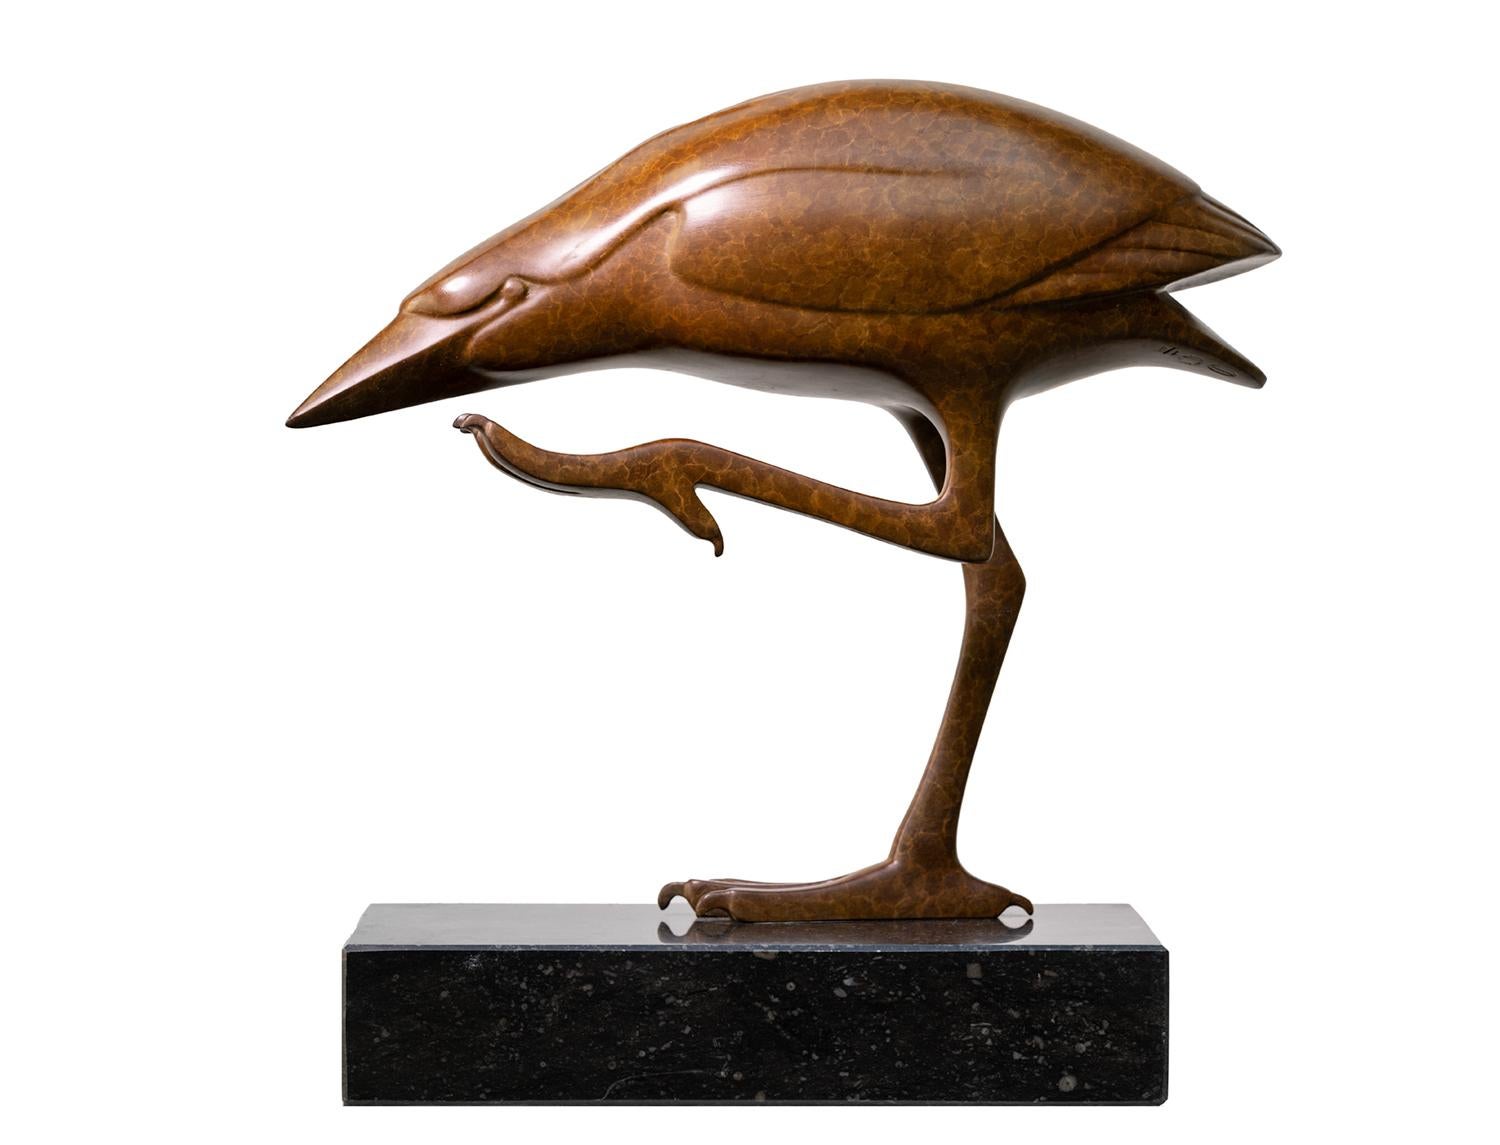 Evert den Hartog Figurative Sculpture - Kwak no. 5 Bird Bronze Sculpture Animal Animalier Brown Patina Nature 